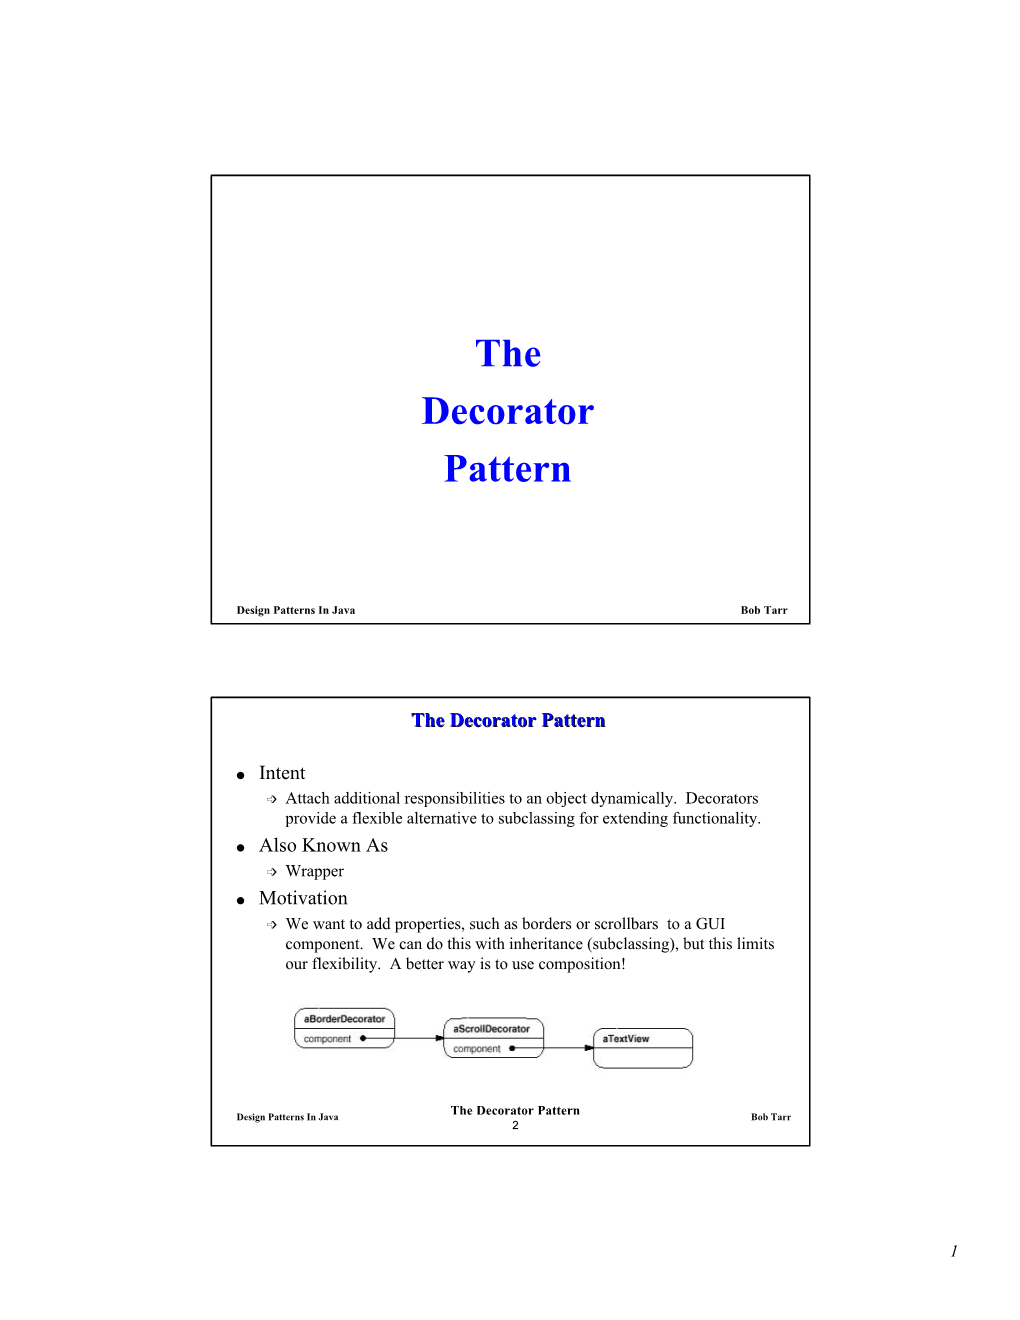 The Decorator Pattern